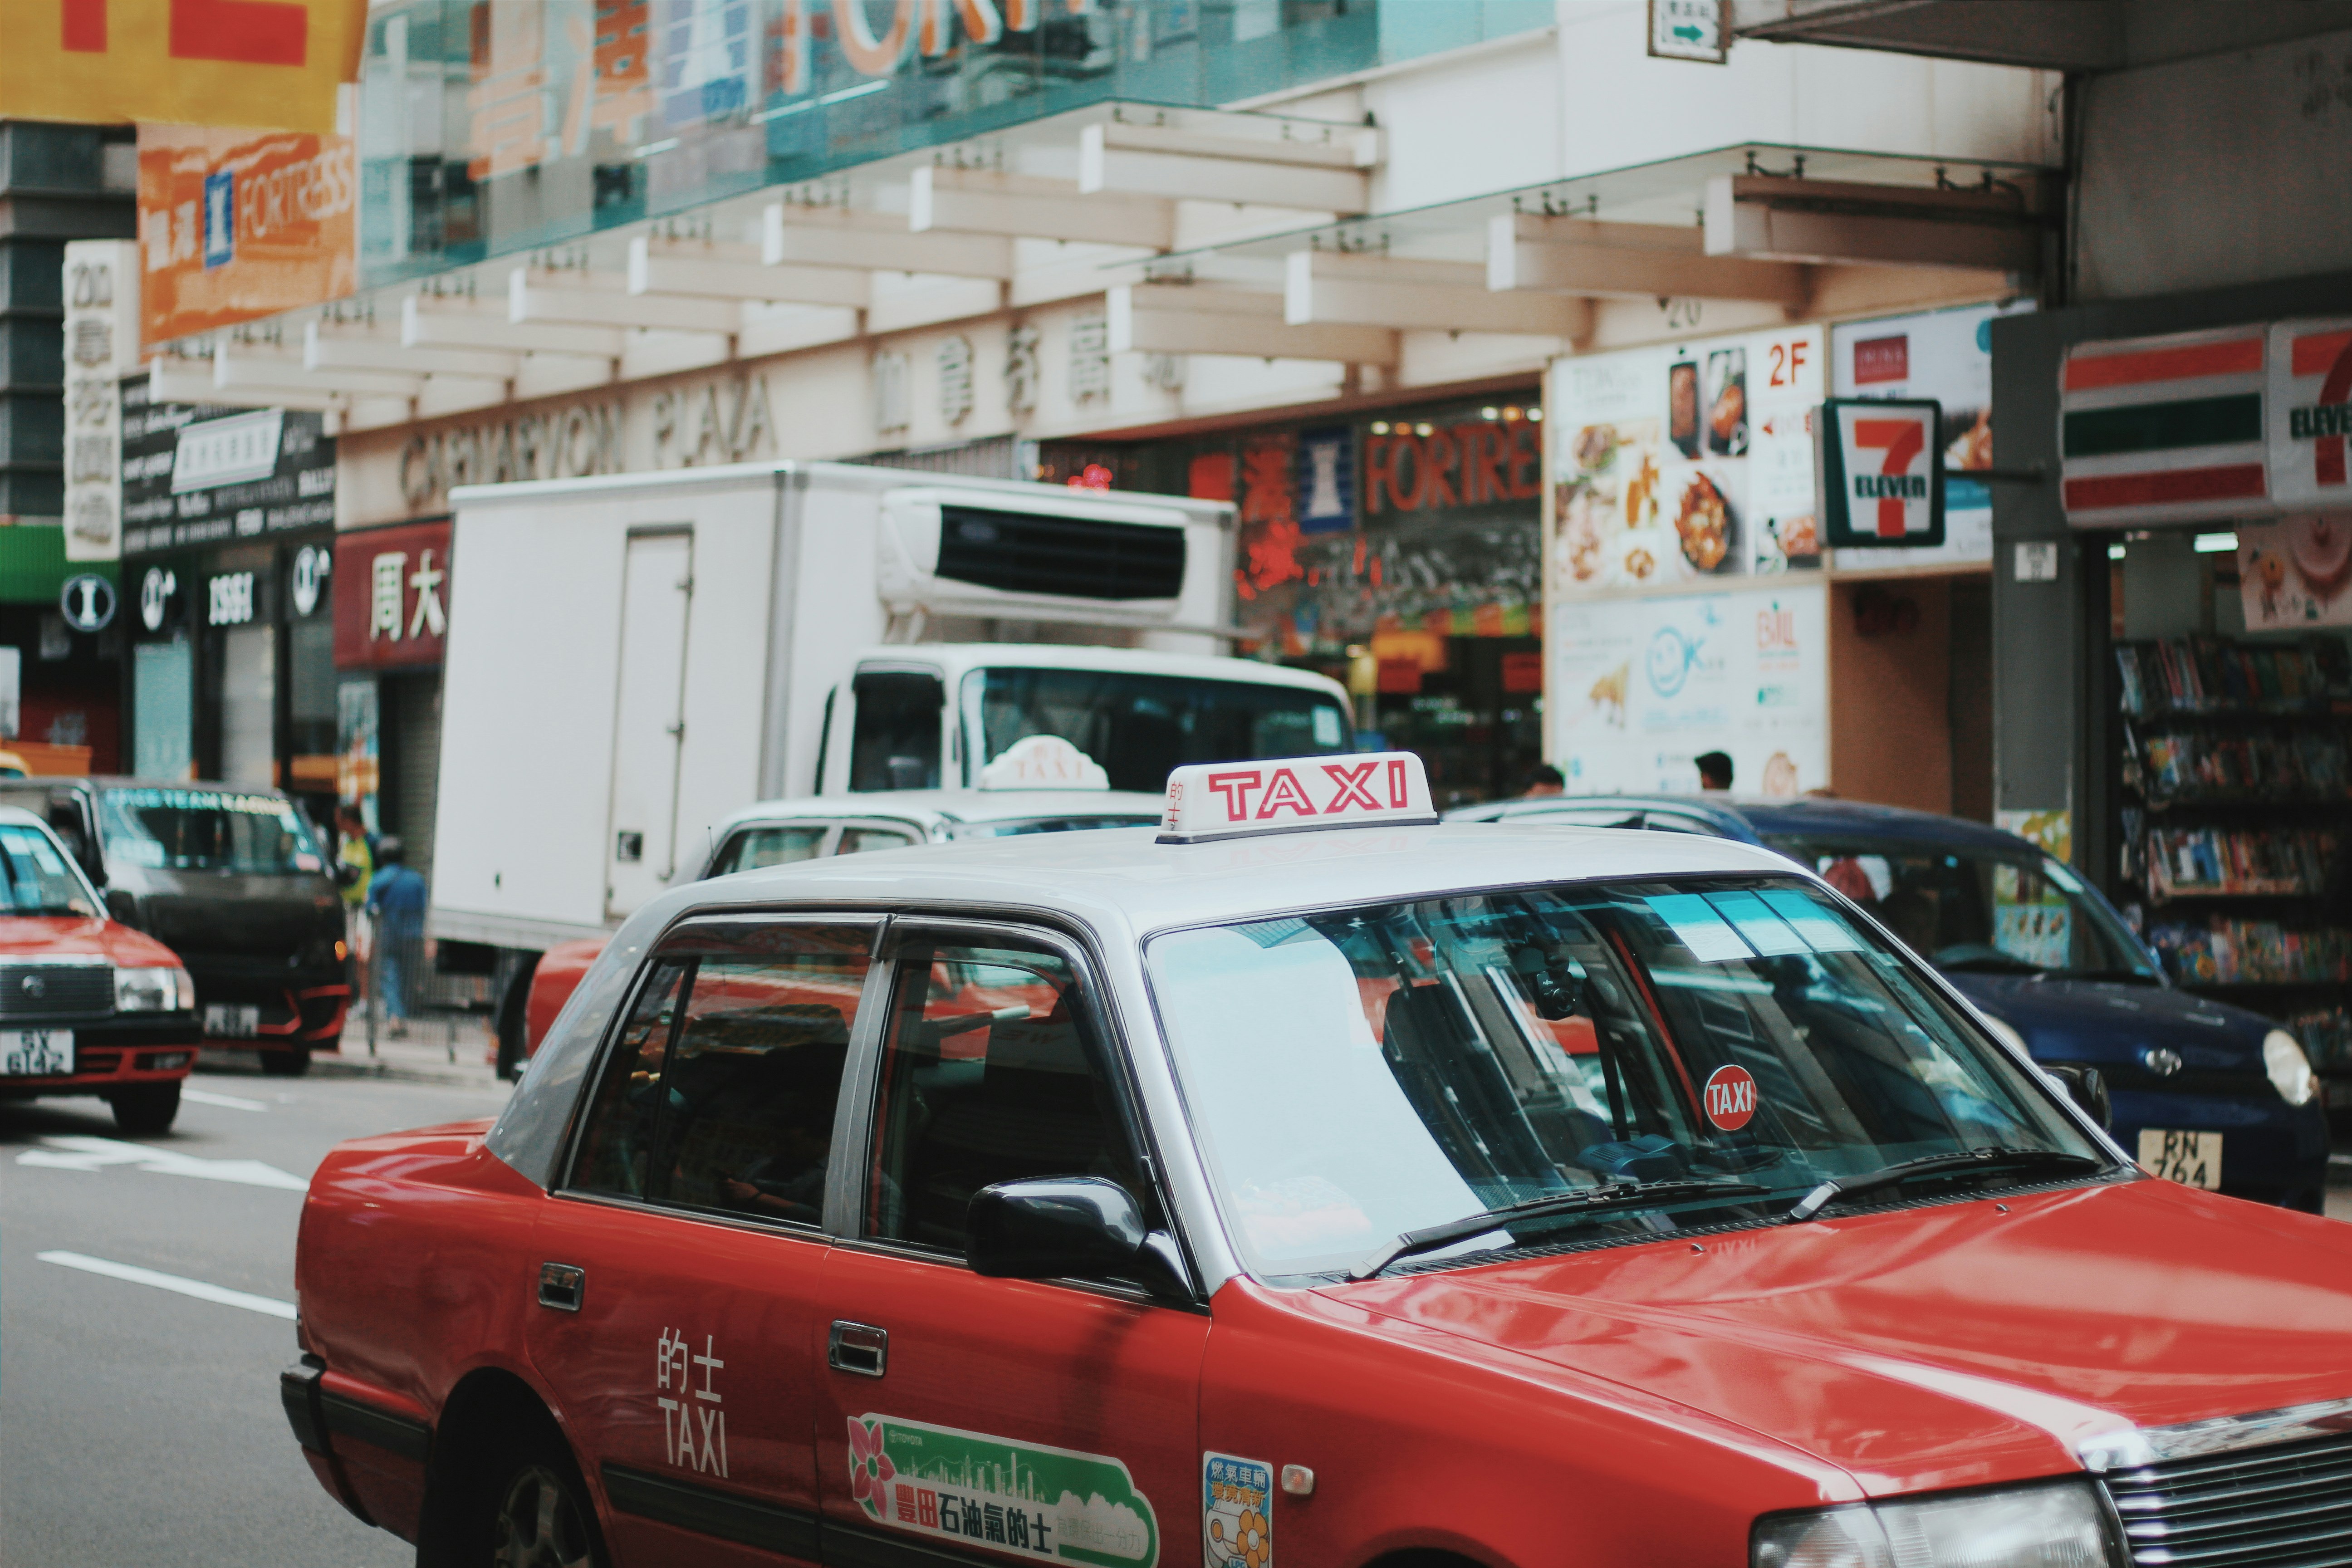 Taxi car in an urban area of Tsim Sha Tsui